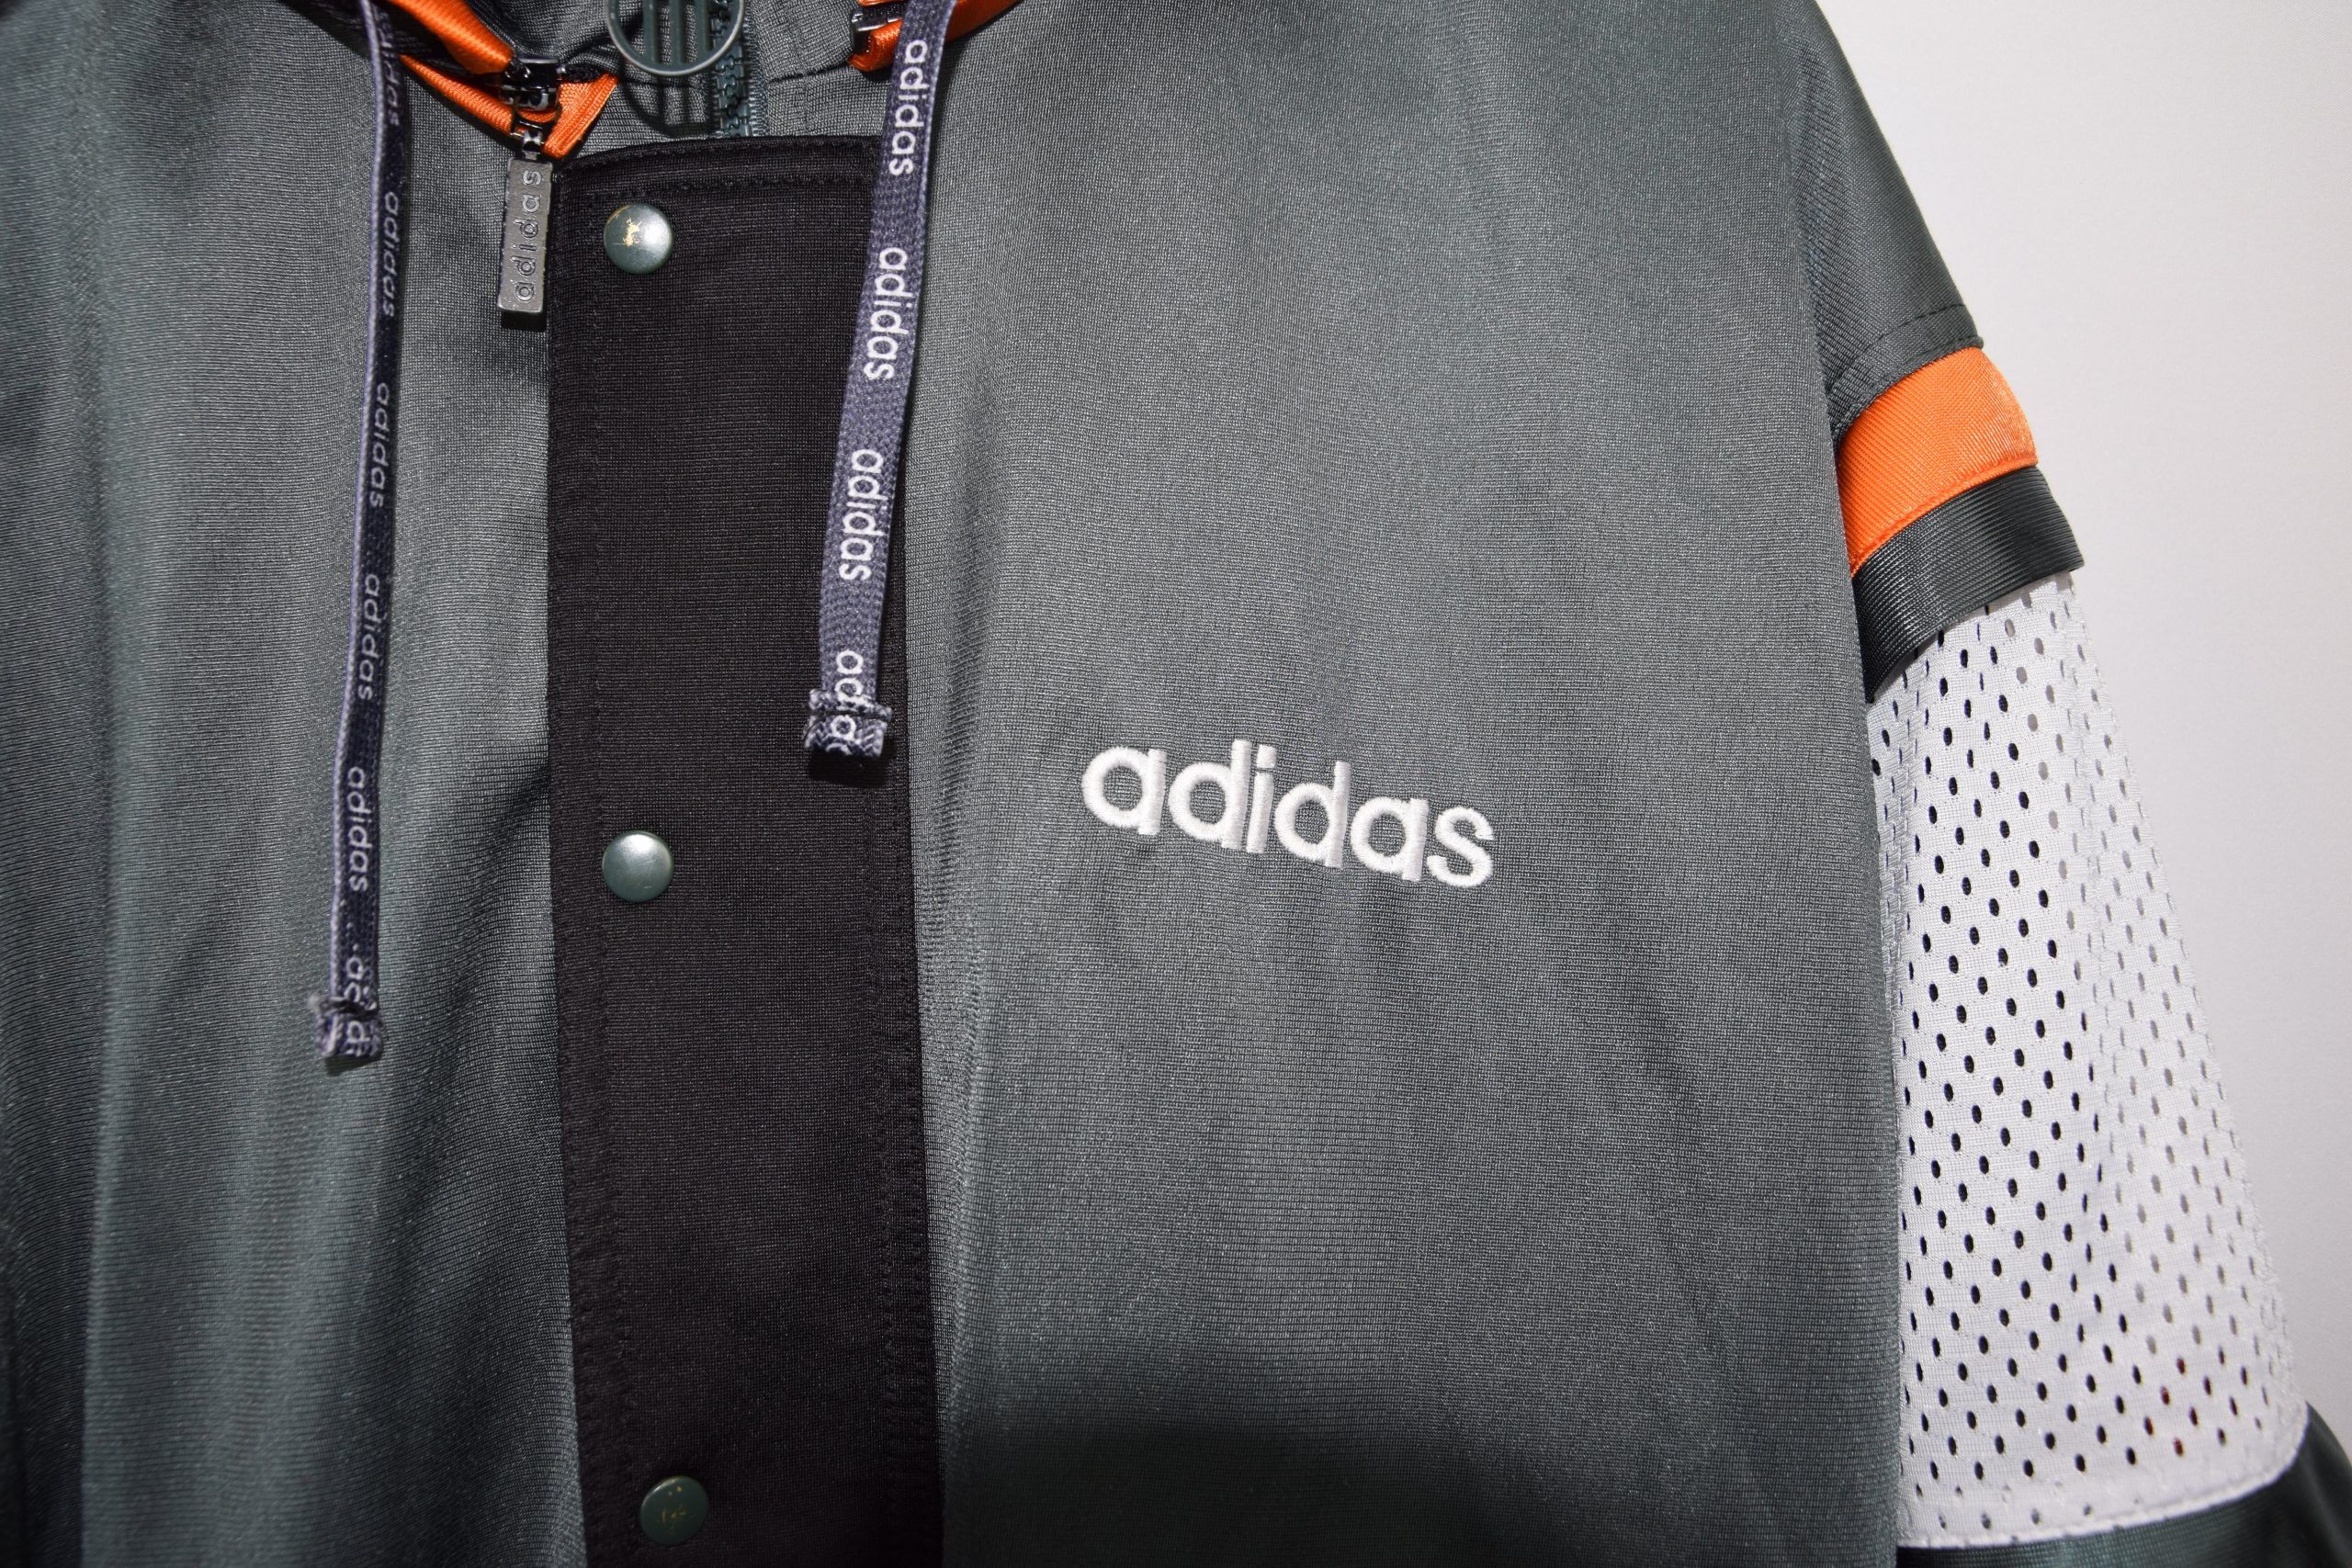 Adidas Handsome adidas hoodie Size US S / EU 44-46 / 1 - 5 Thumbnail